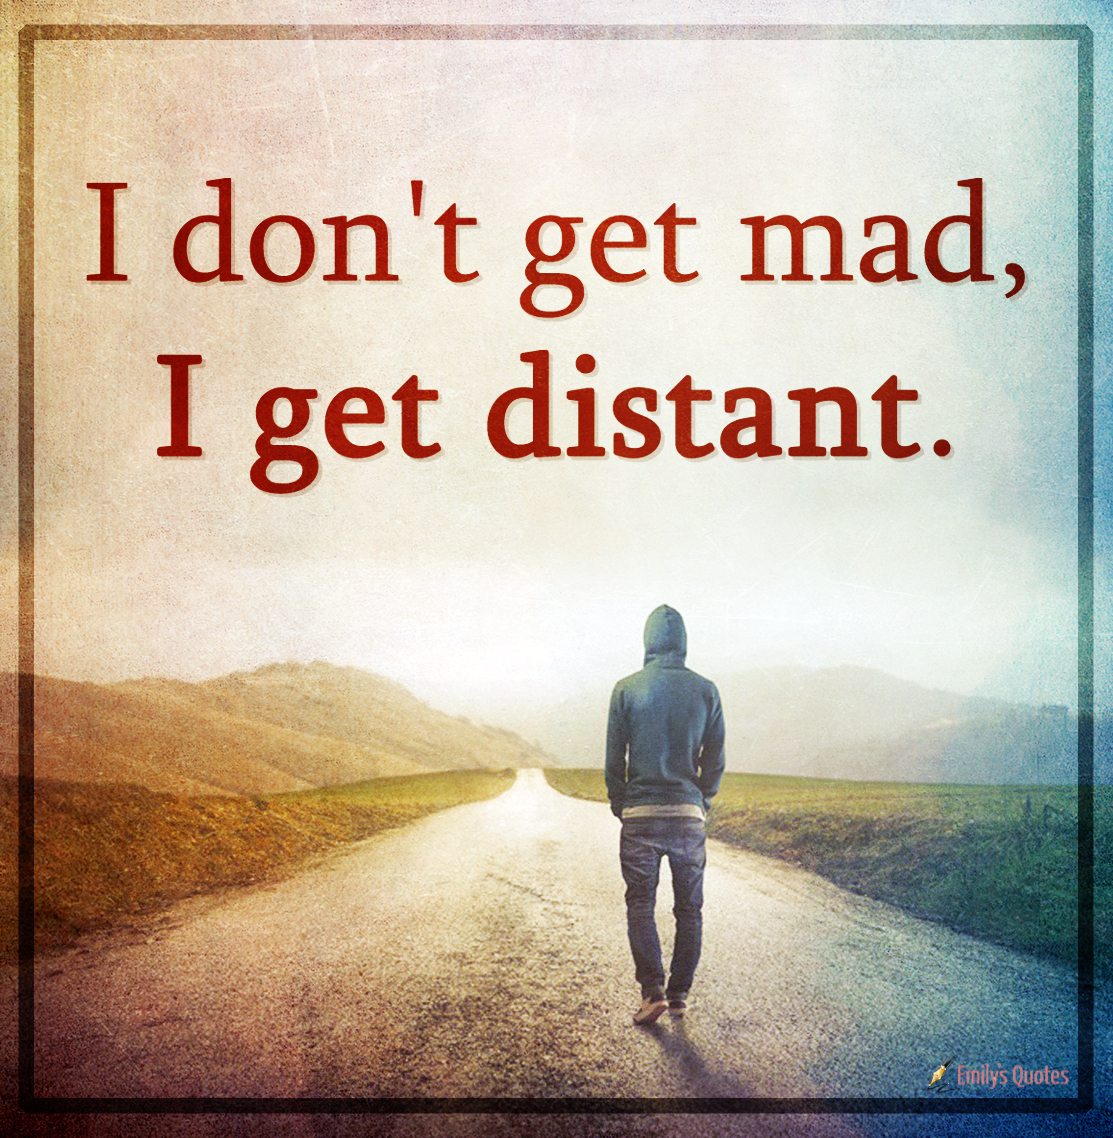 I don’t get mad, I get distant